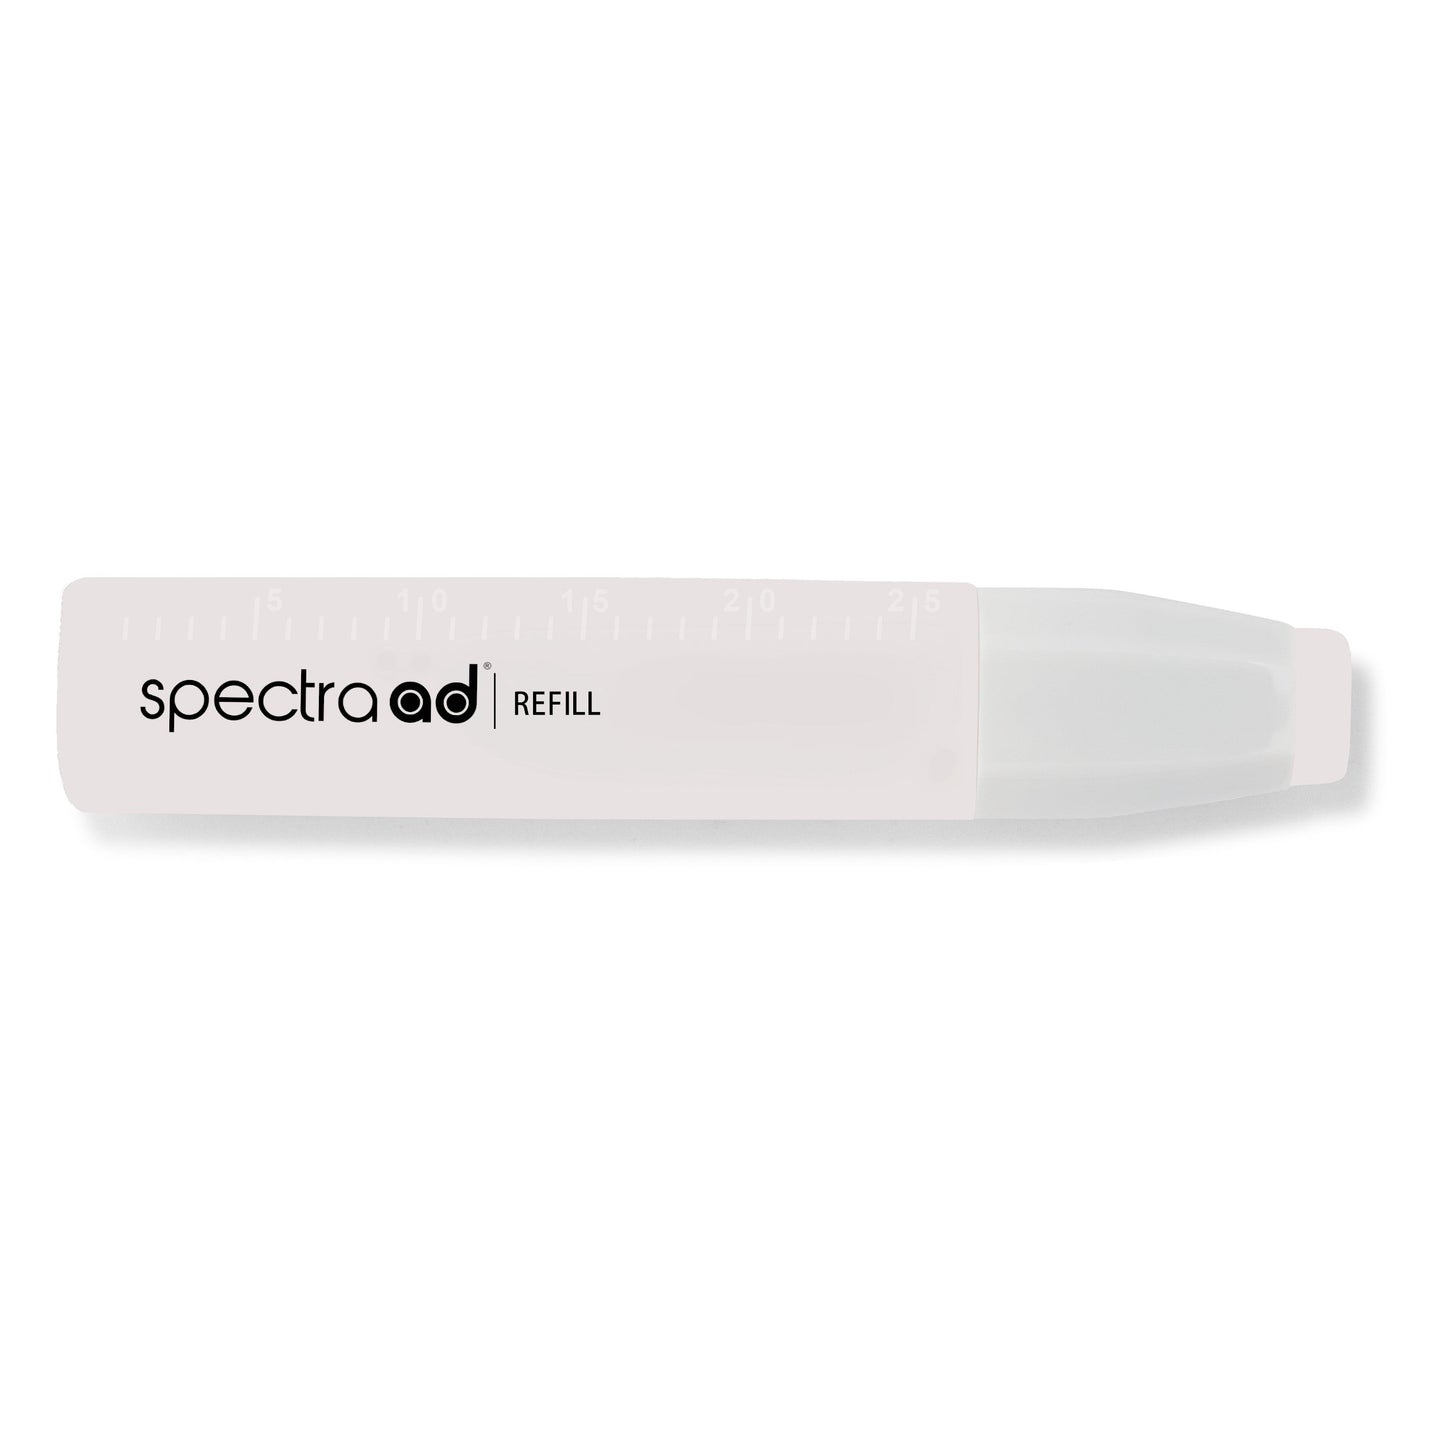 056 - Warm Gray 40% - Spectra AD Refill Bottle